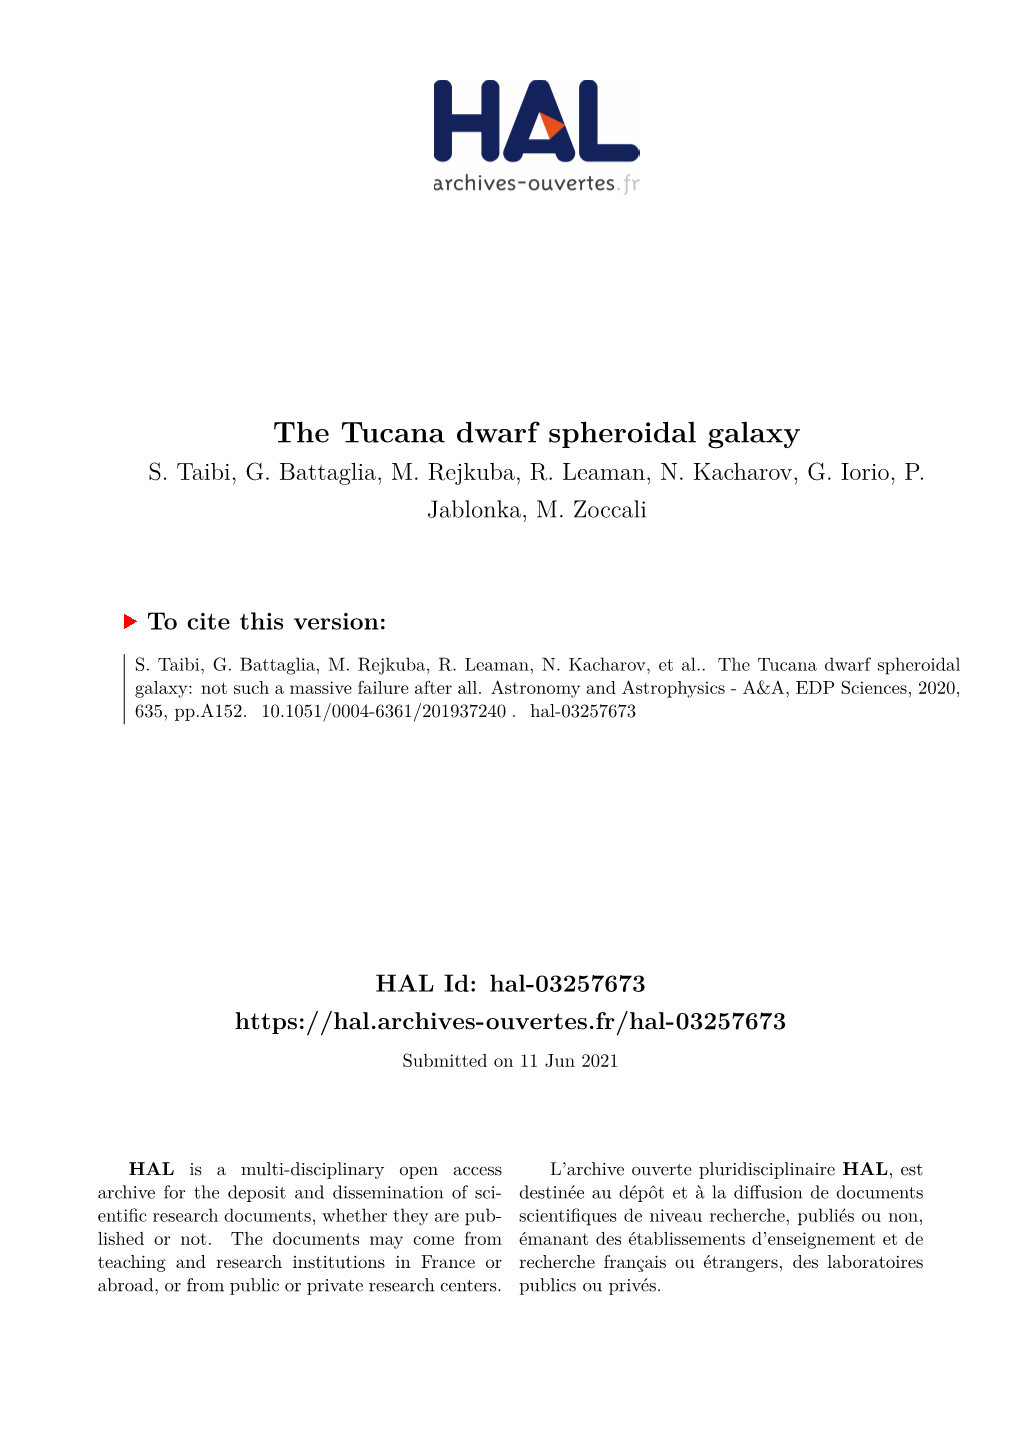 The Tucana Dwarf Spheroidal Galaxy S